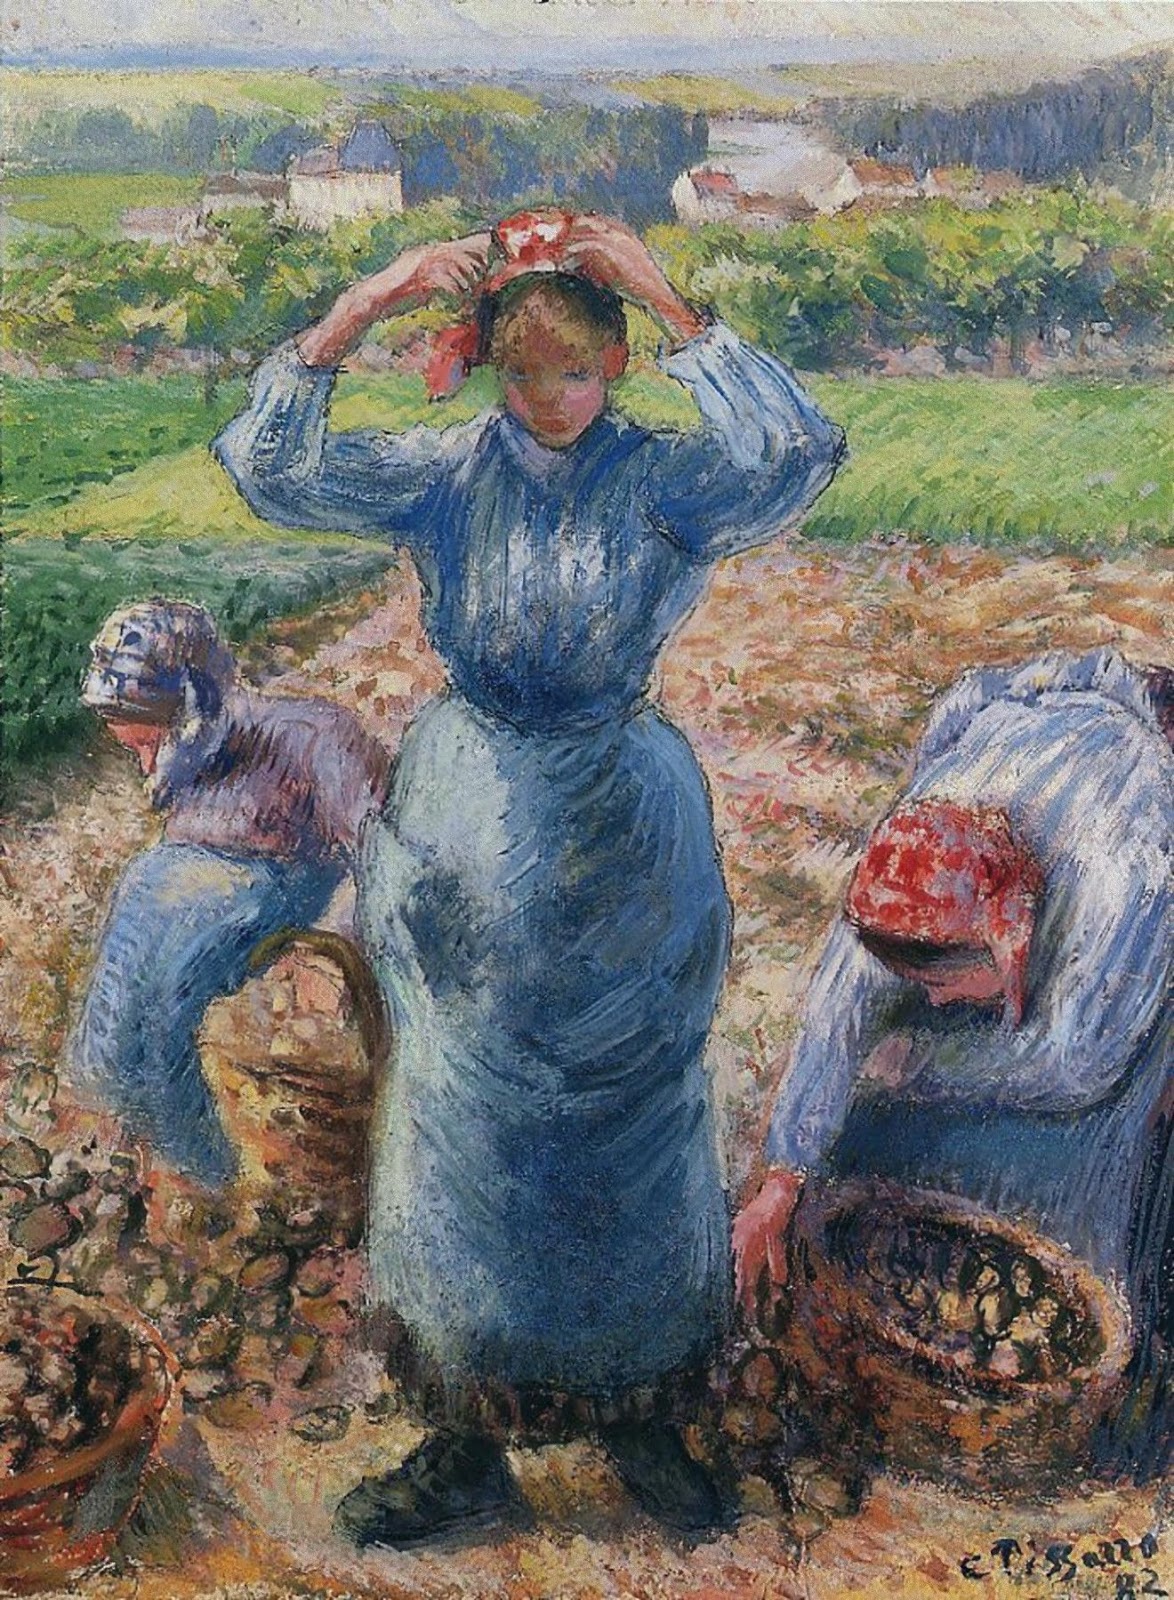 Camille+Pissarro-1830-1903 (357).jpg